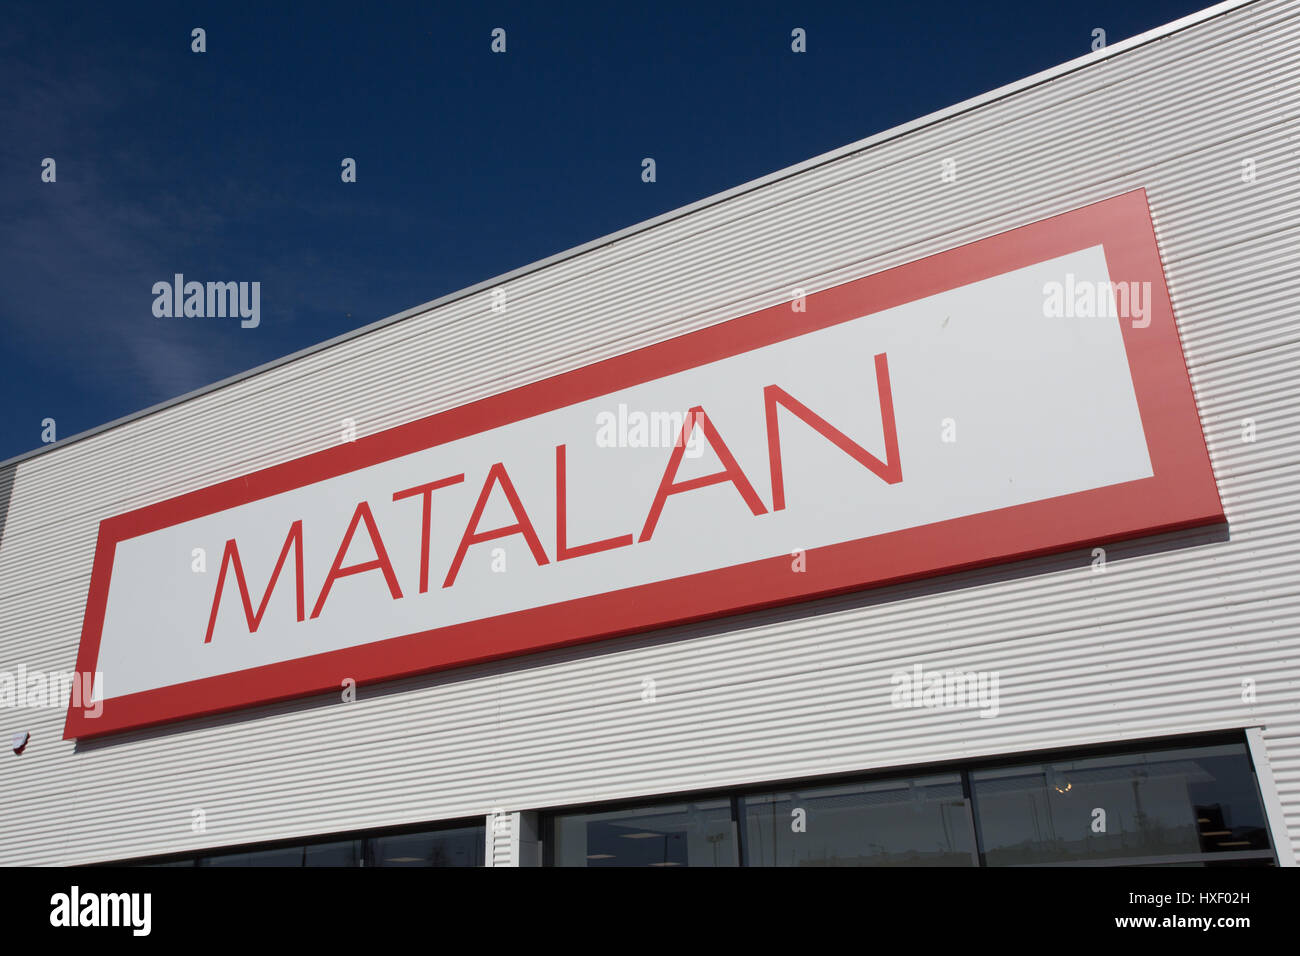 Matalan signage Stock Photo